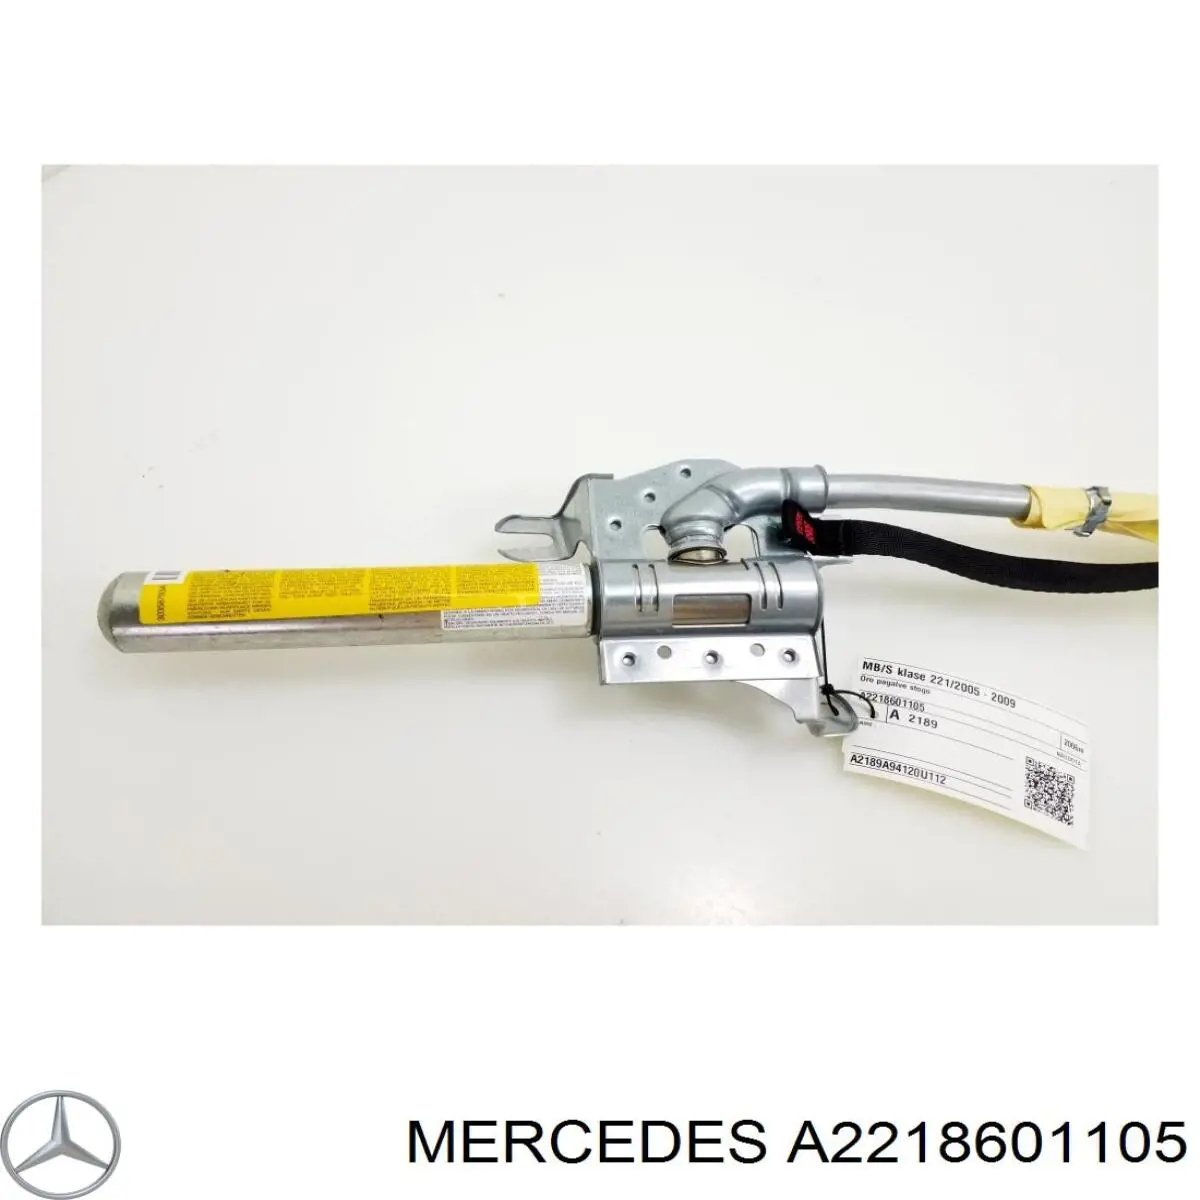 A2218601105 Mercedes airbag de cortina lateral izquierda